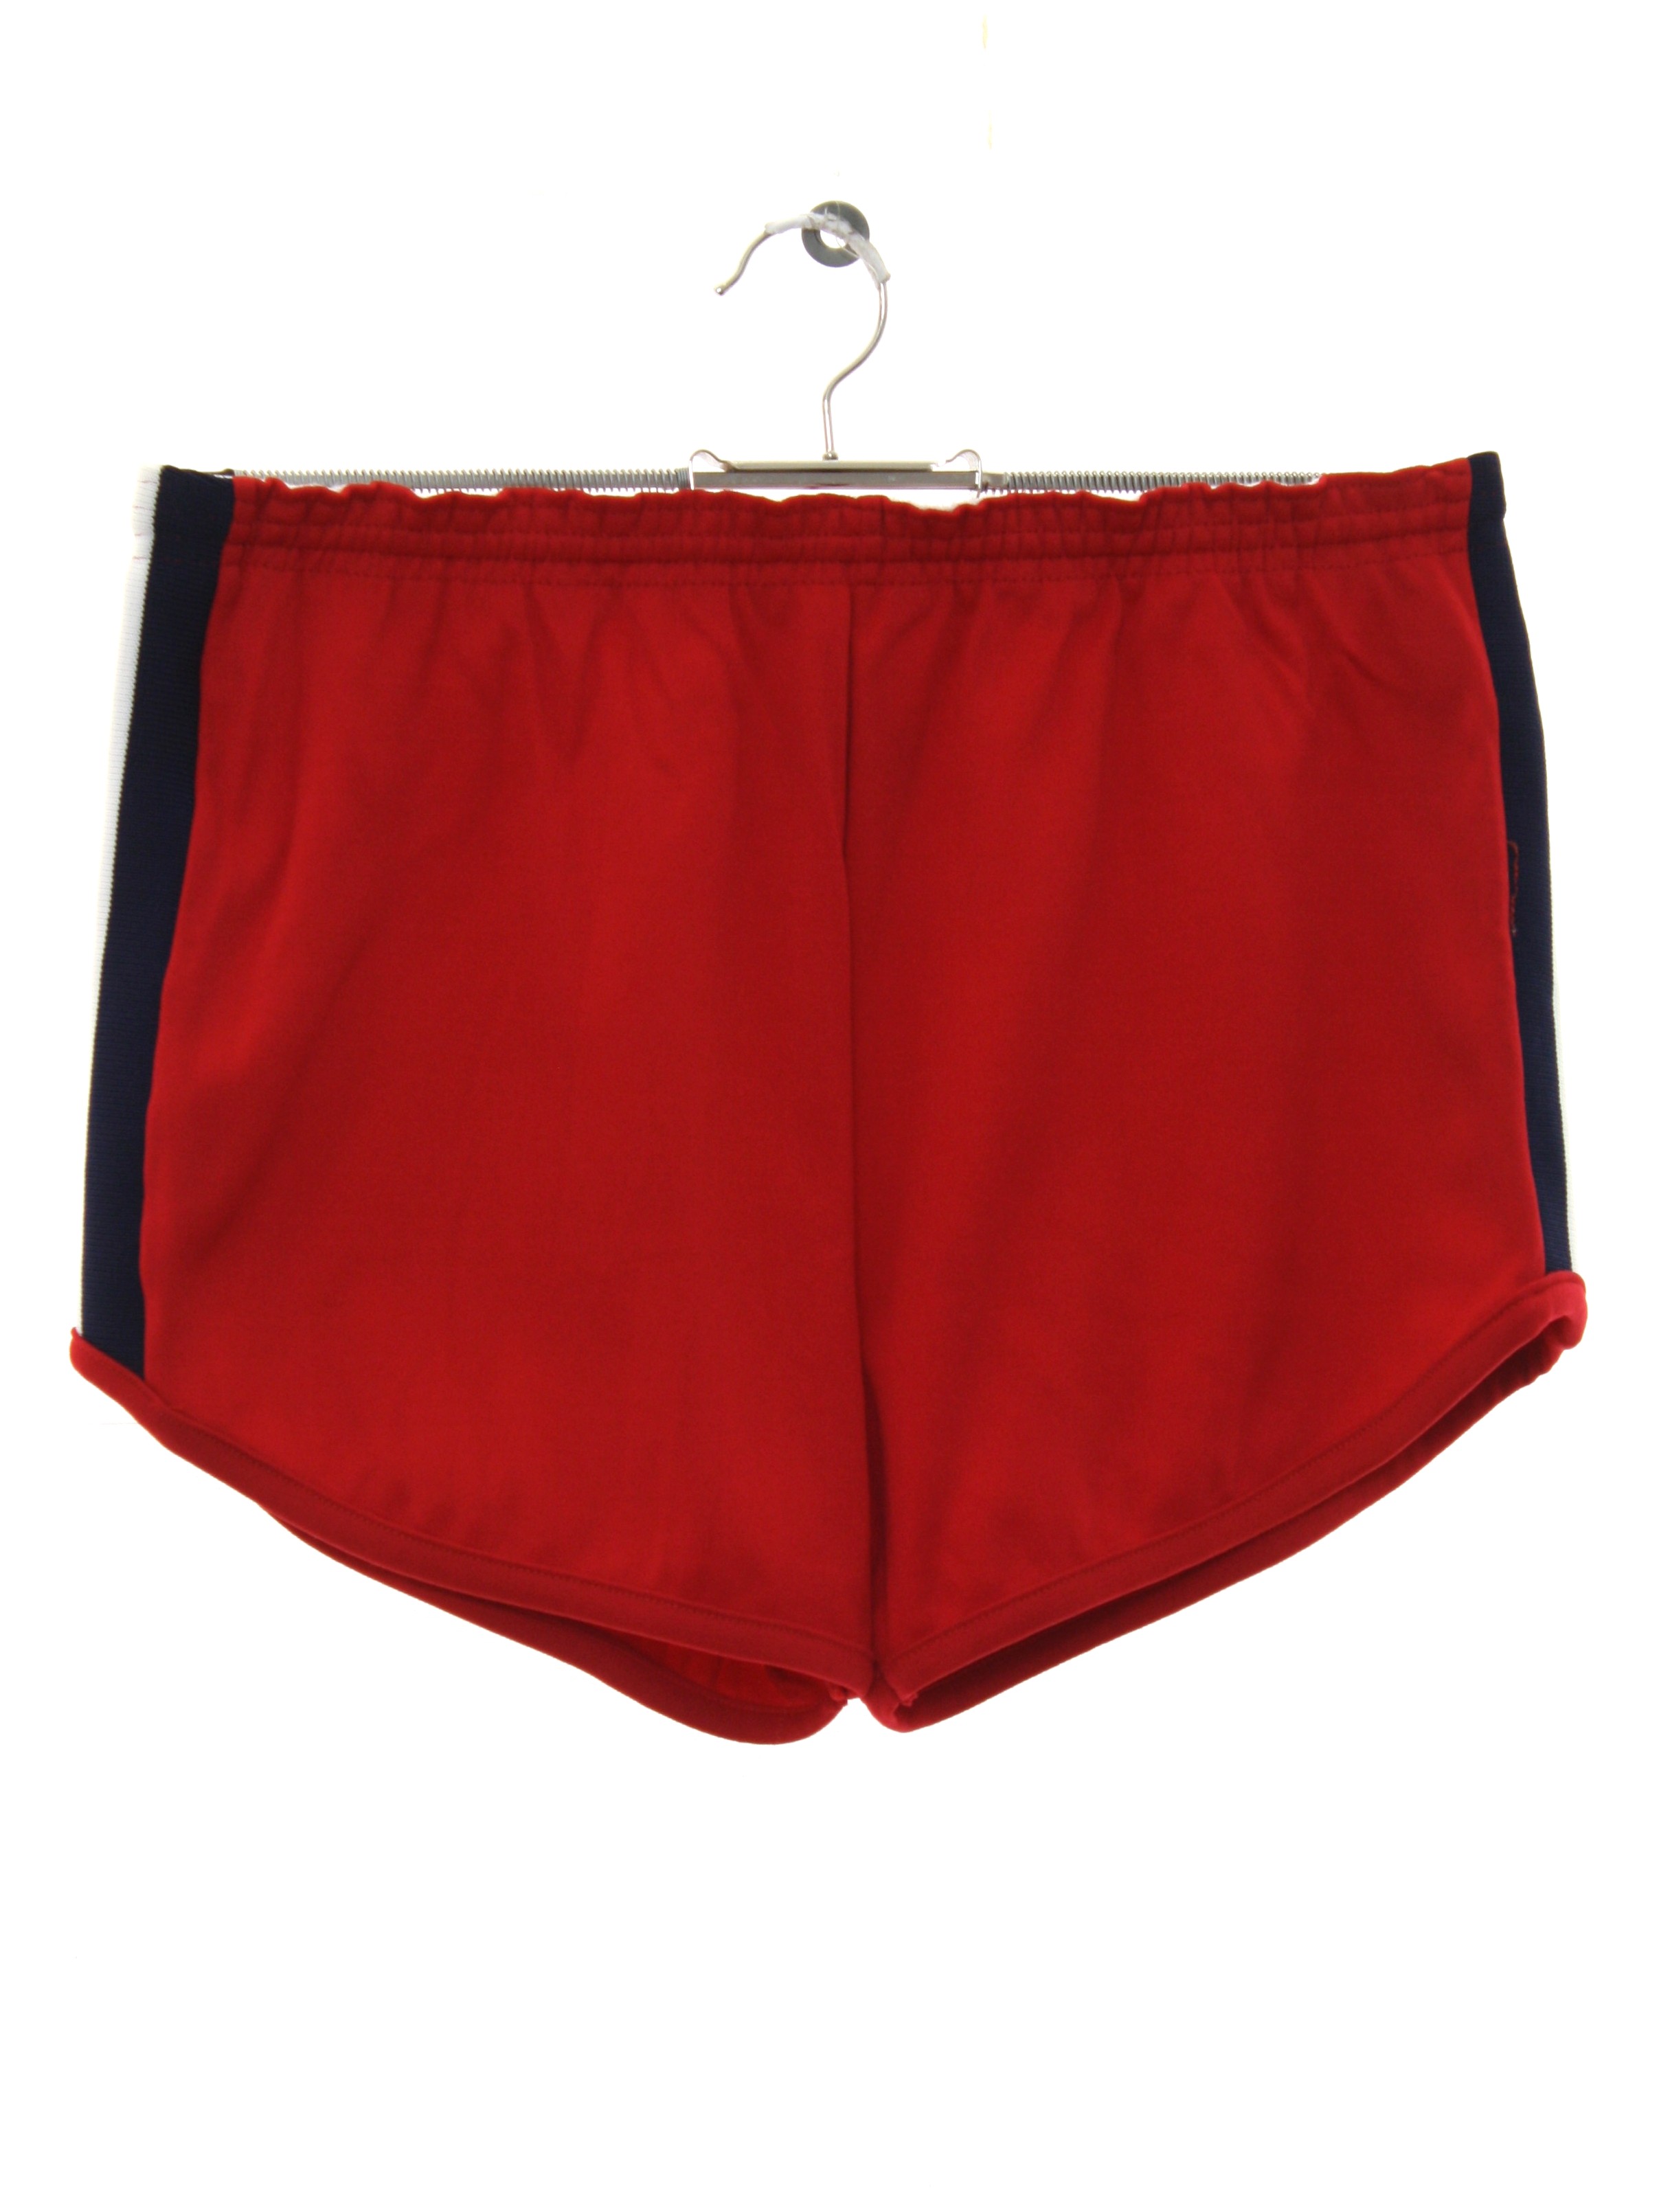 1970's Shorts (Protour): 70s -Protour- Mens red background nylon ...